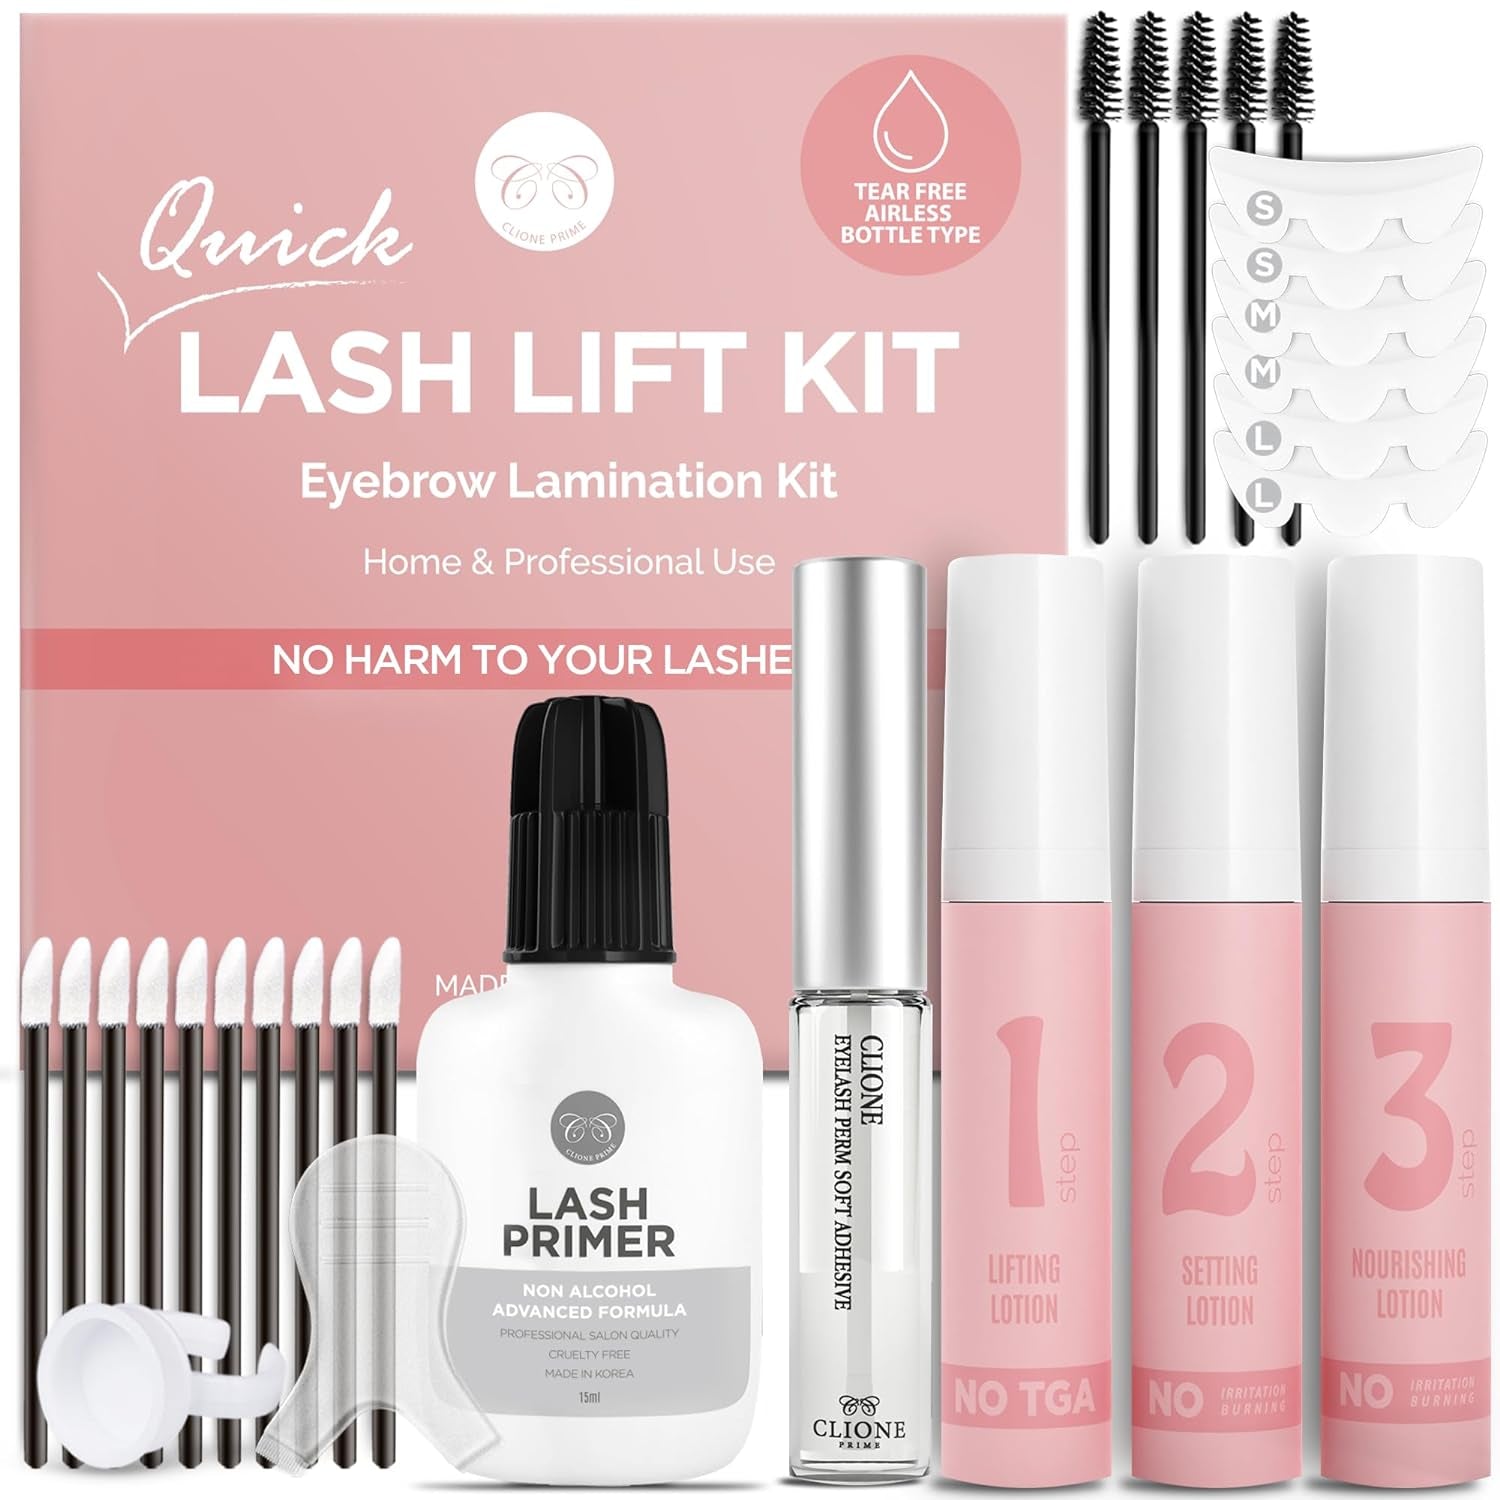 Lash Lift Kit - Eyebrow Lamination 5 Applications Kit Home